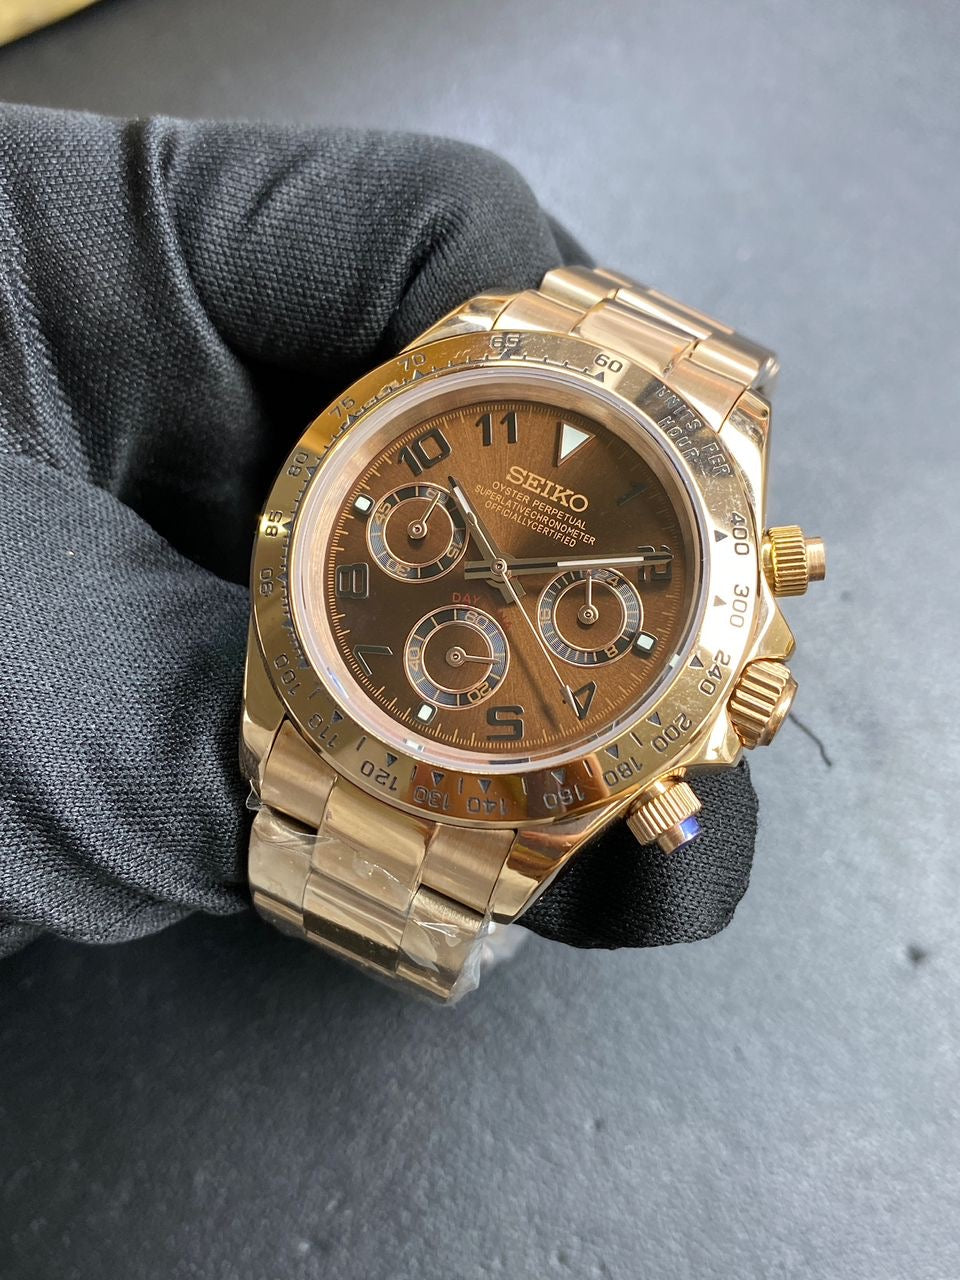 Seiko mod rosegold Daytona brown dial VK63 chronograph watch